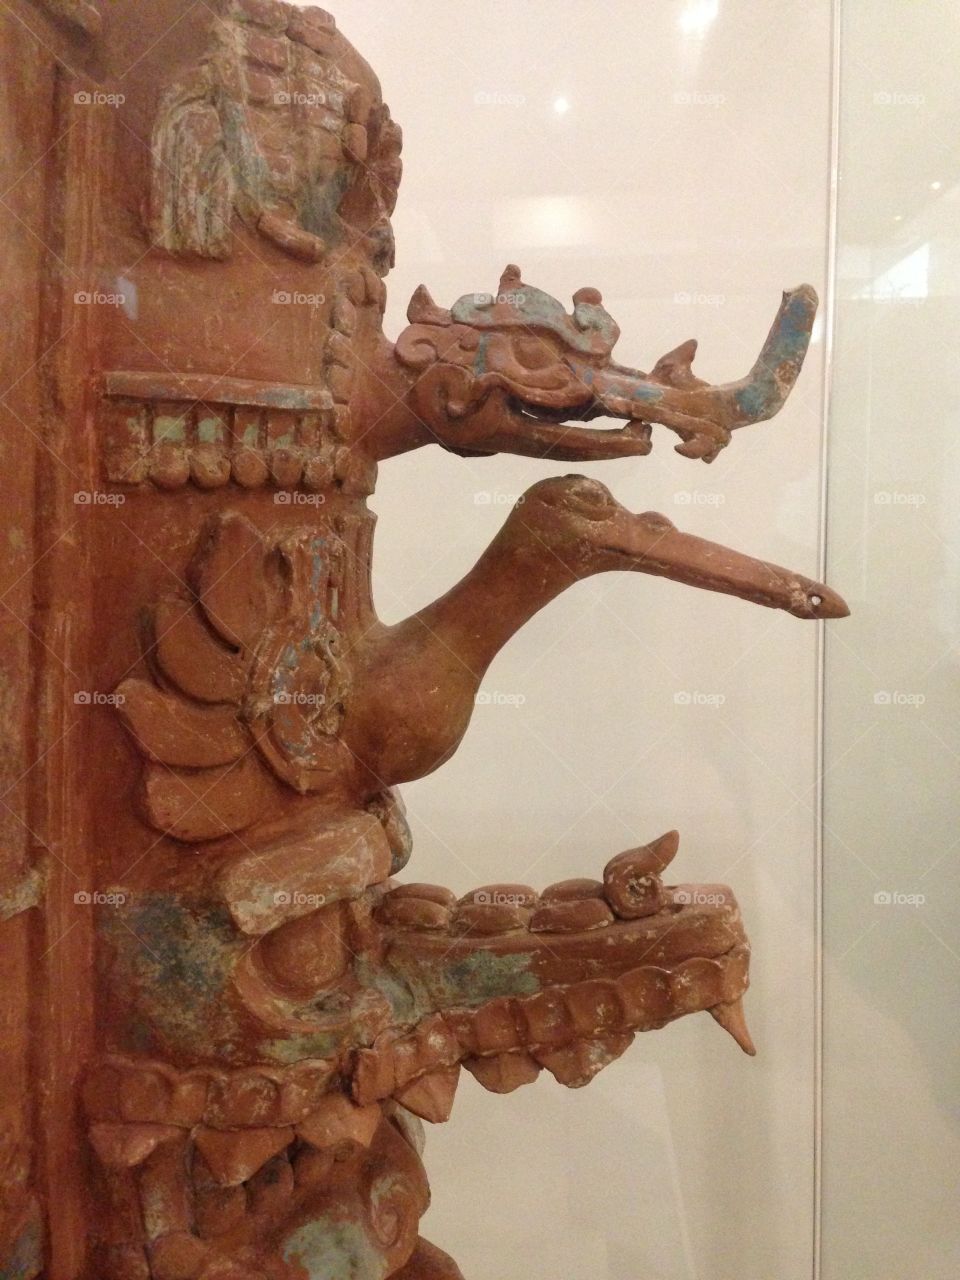 Mayan totem